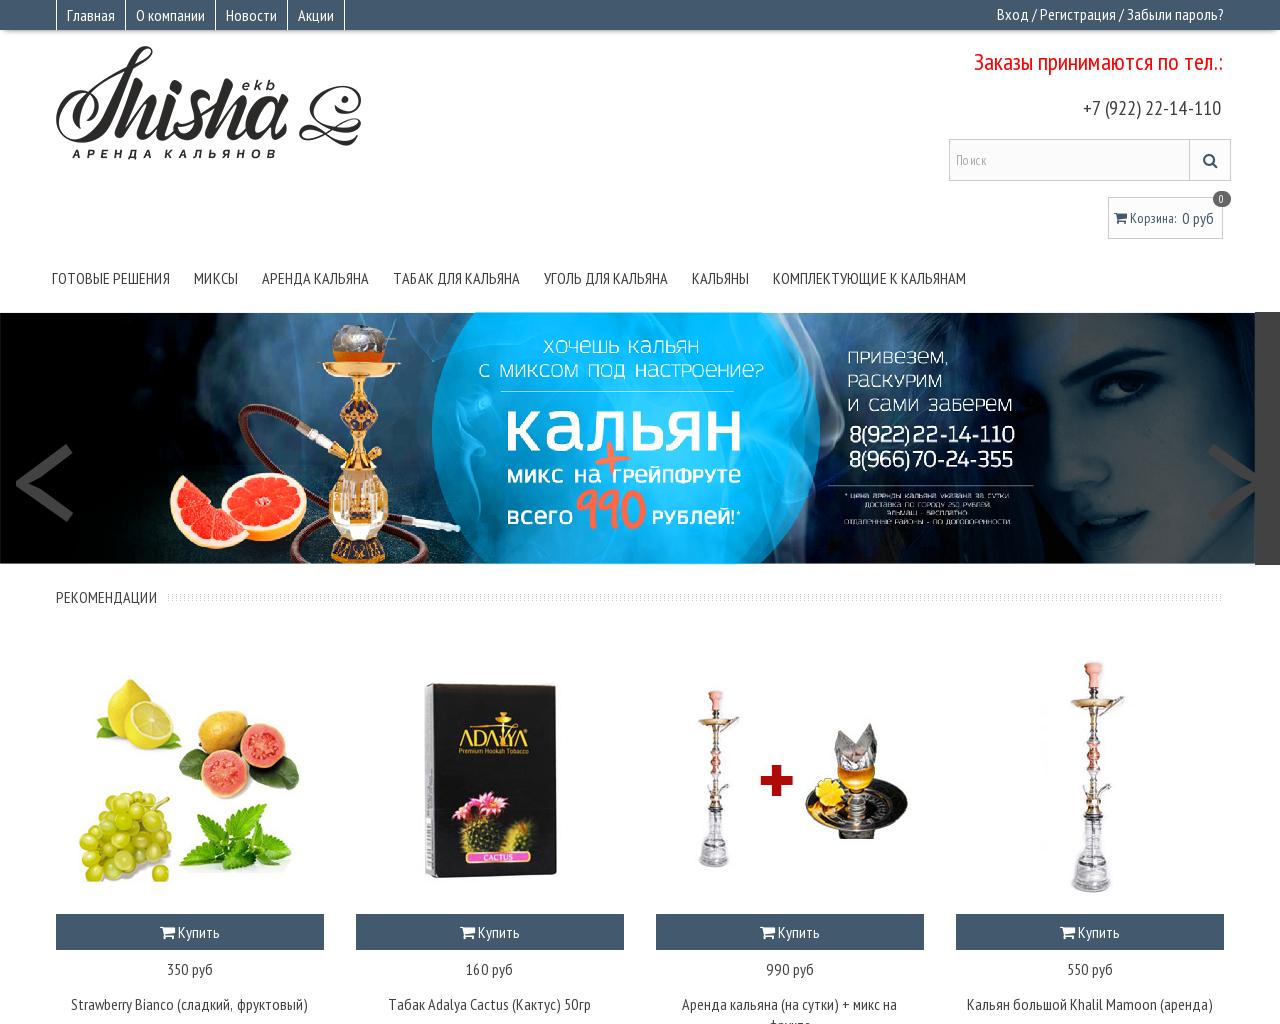 Изображение сайта shisha-ekb.ru в разрешении 1280x1024